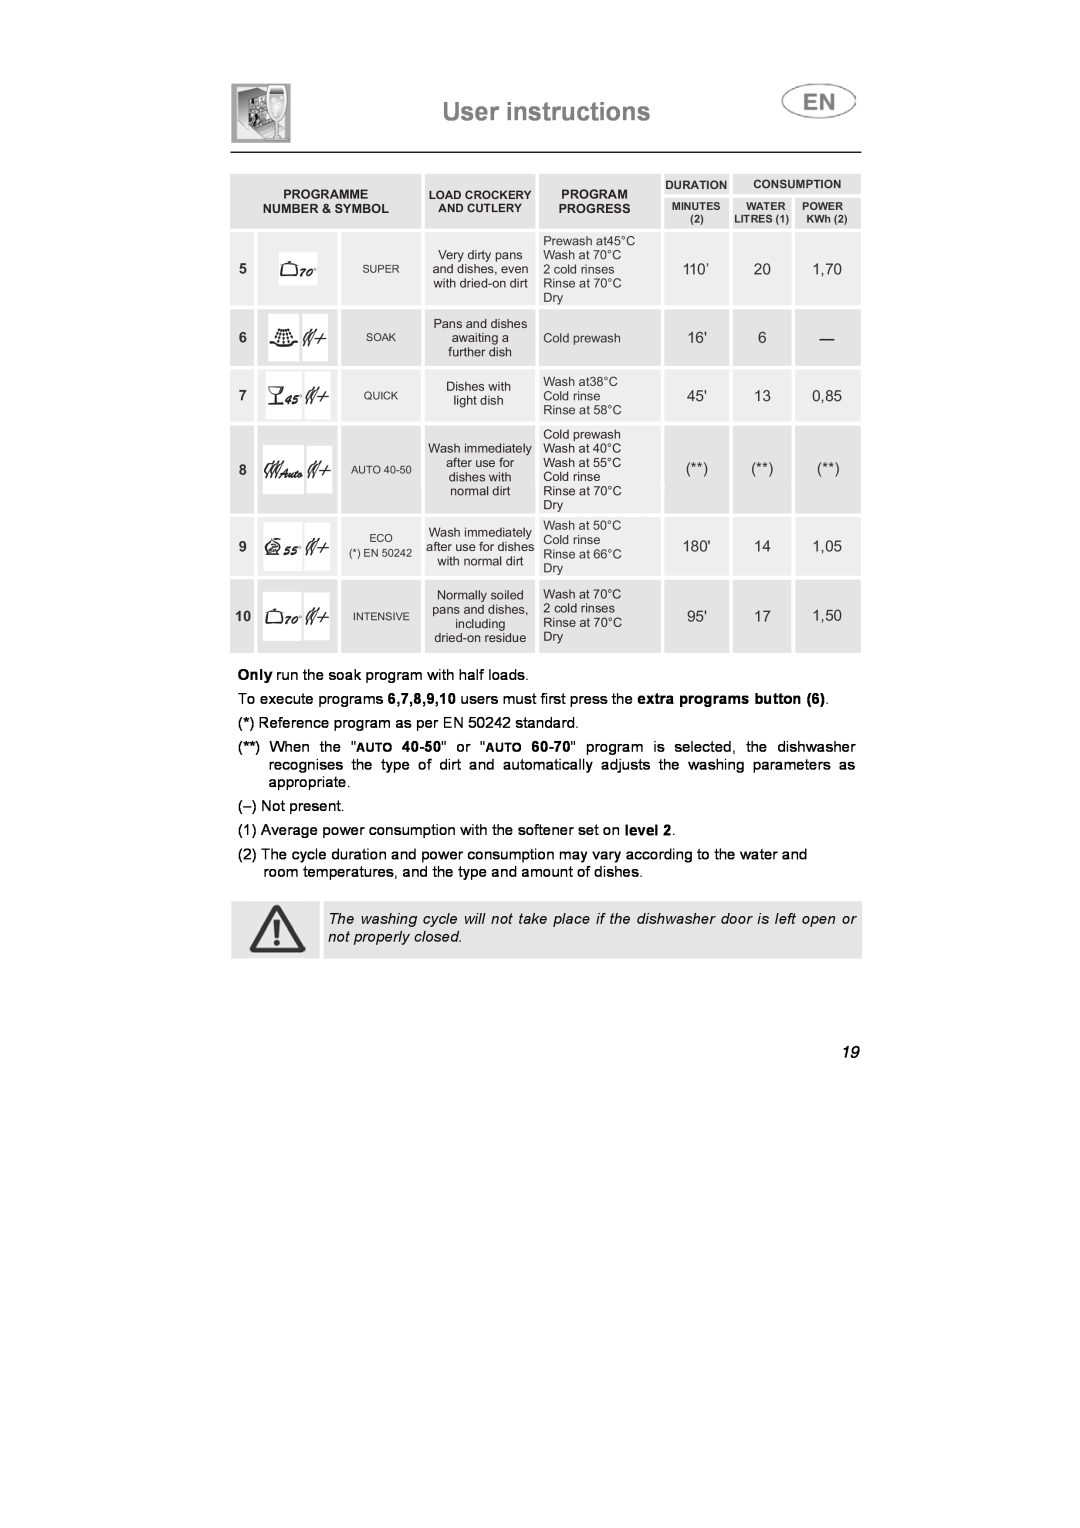 CDA VW80 manual User instructions, 110’ 20 1,70, 0,85, 1,05, 1,50 